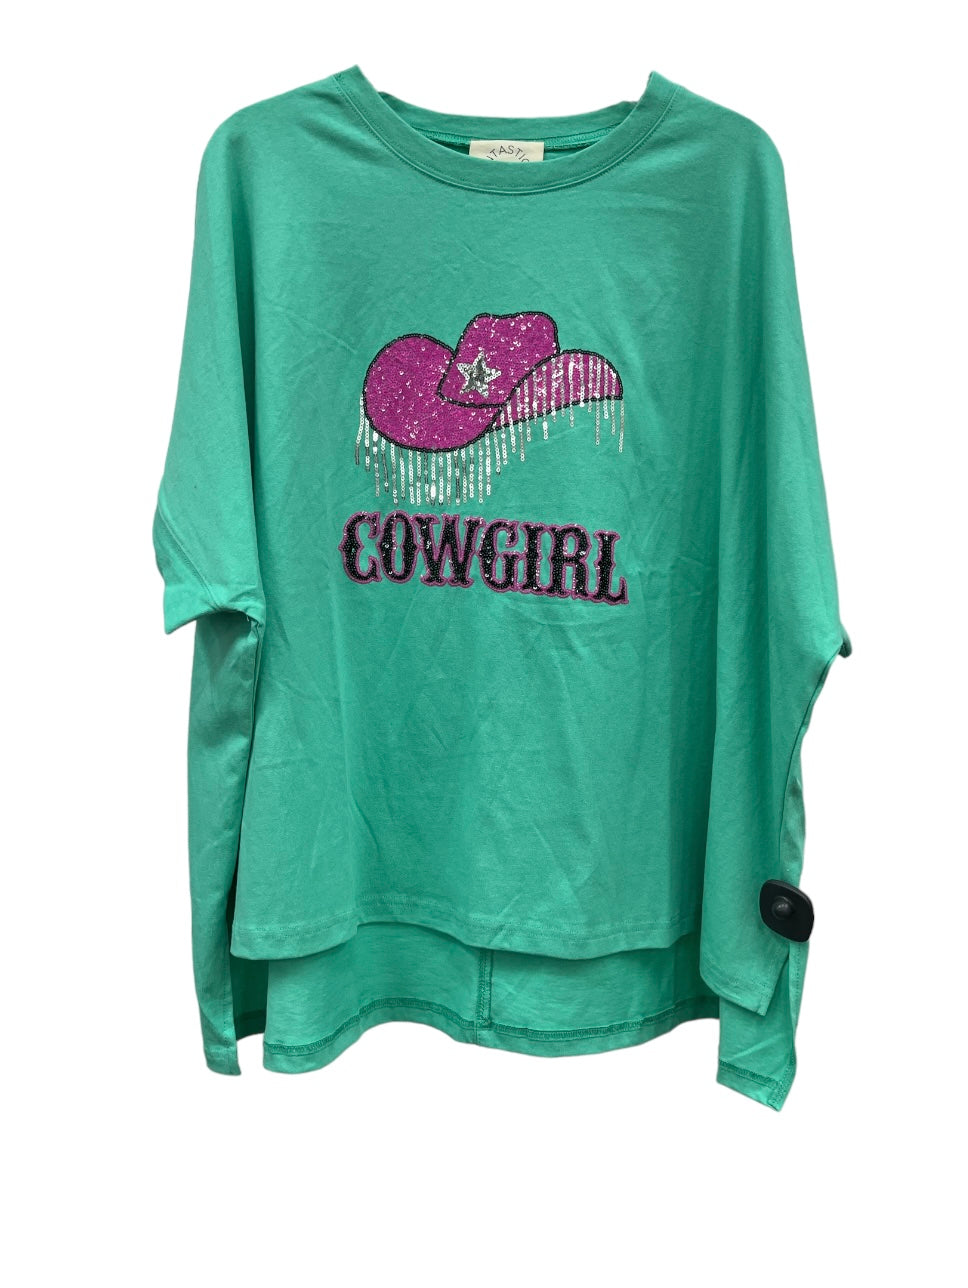 Cowgirl shirt